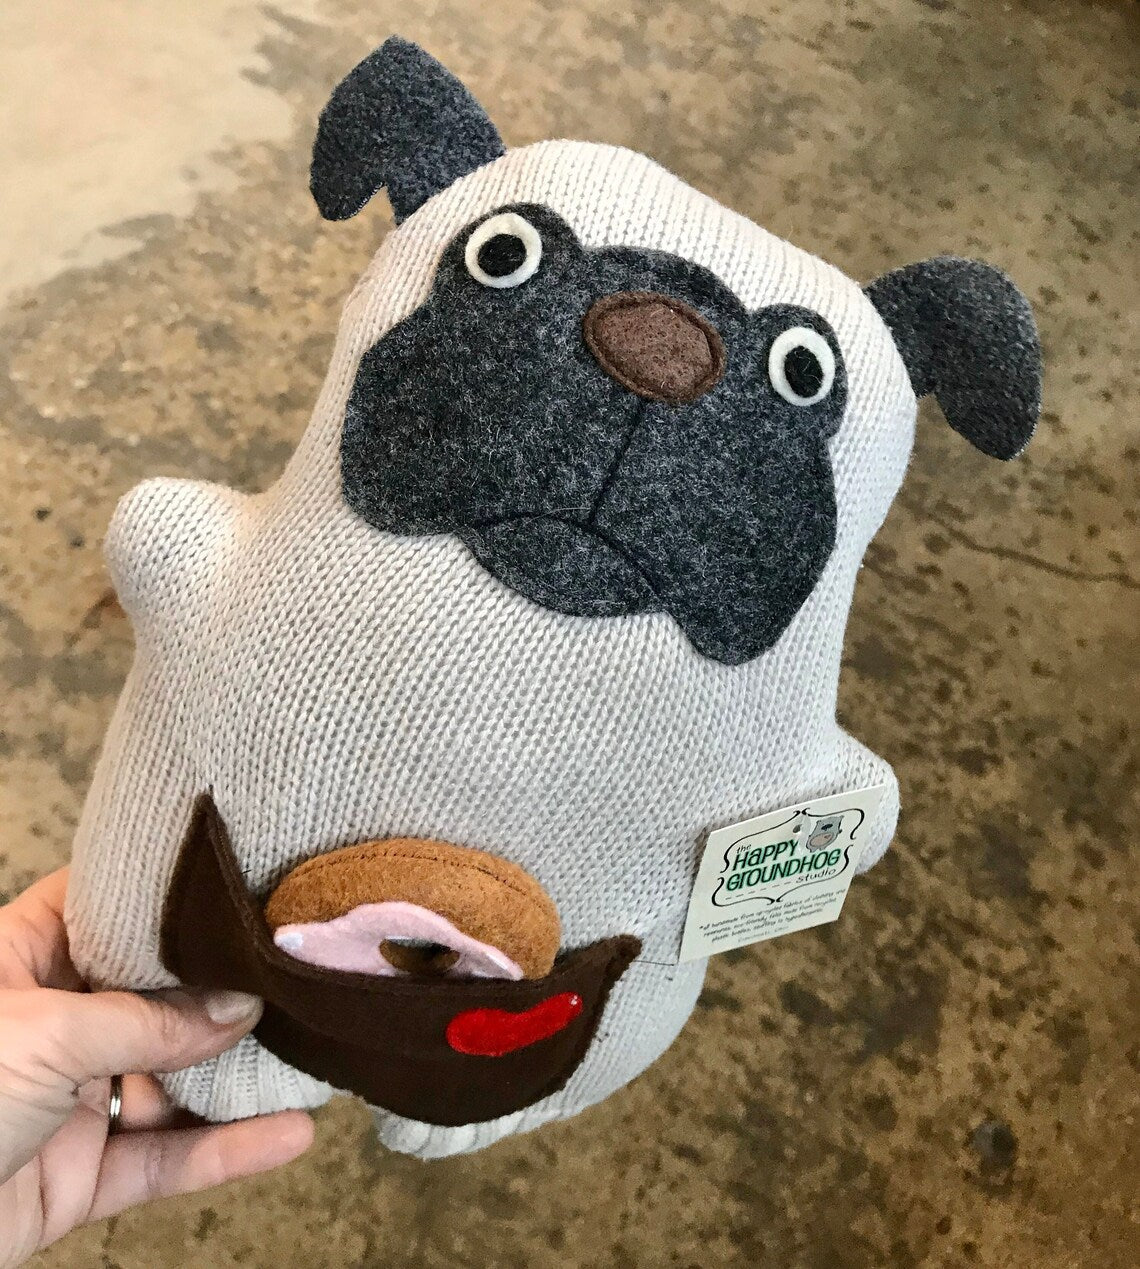 Pug stuffed animal, handmade from up cycled fabrics. pocket on belly with a felt donut inside